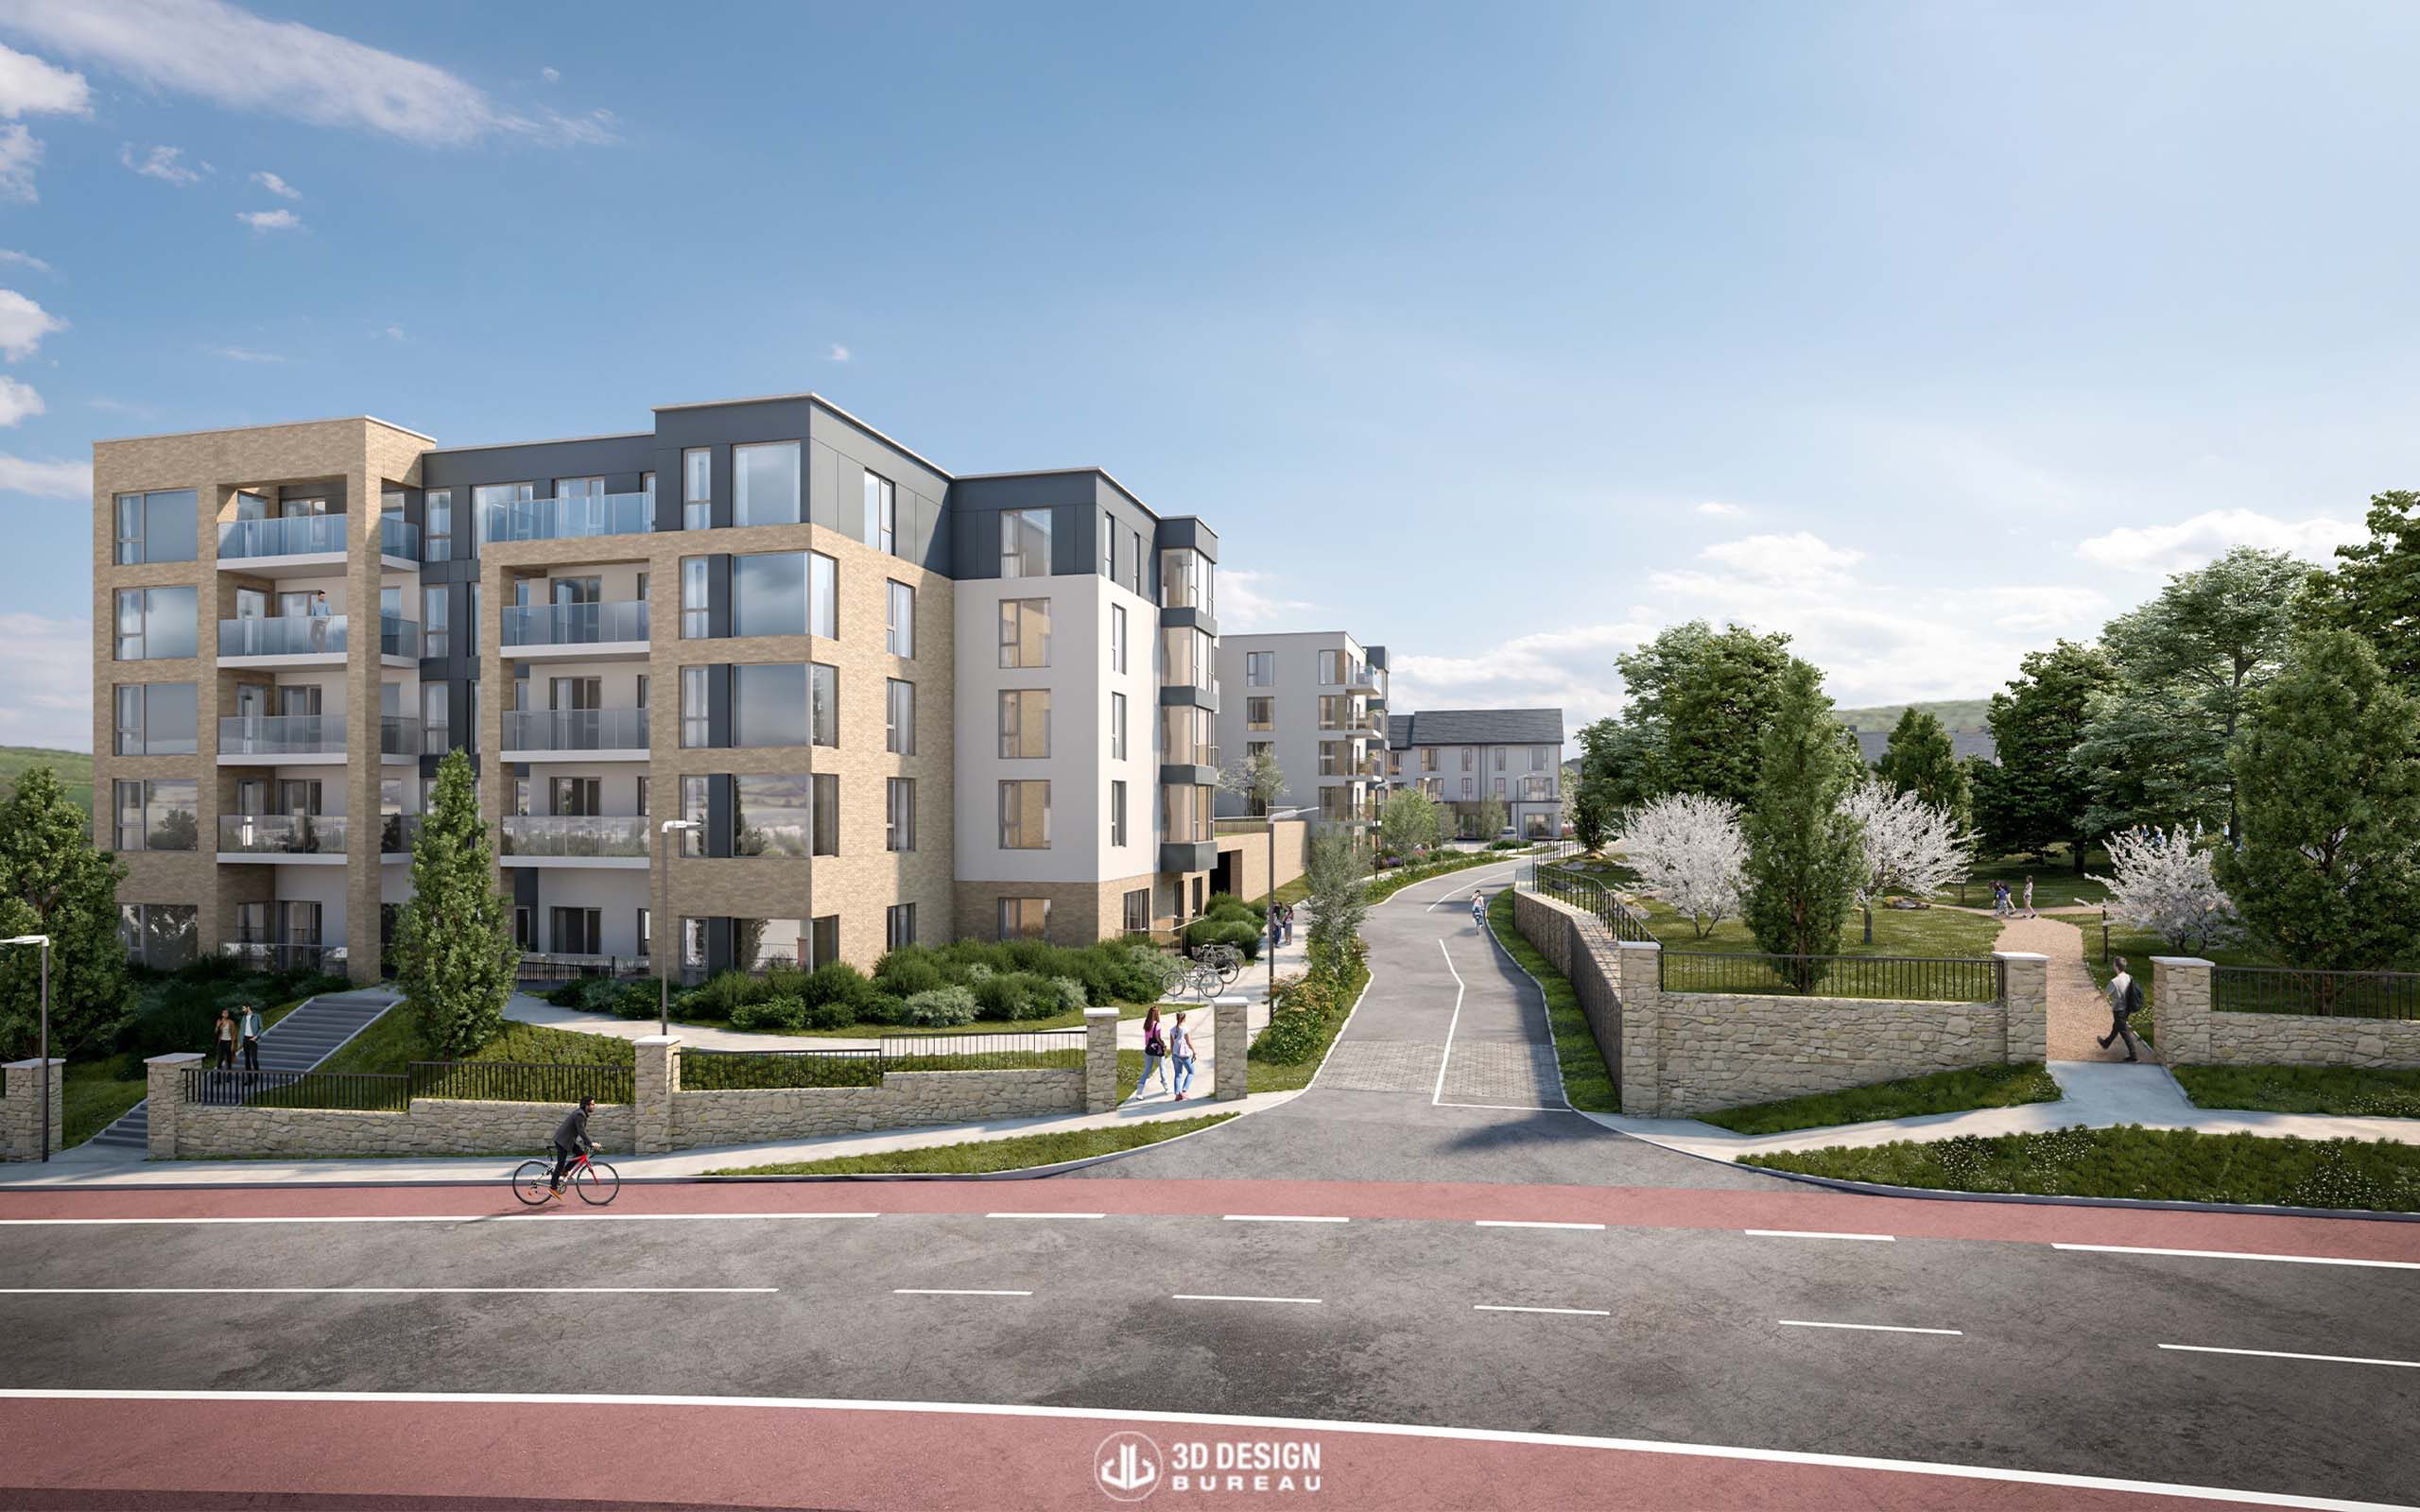 Architectural CGI of planned Strategic Housing Development in Kilternan, Dublin.